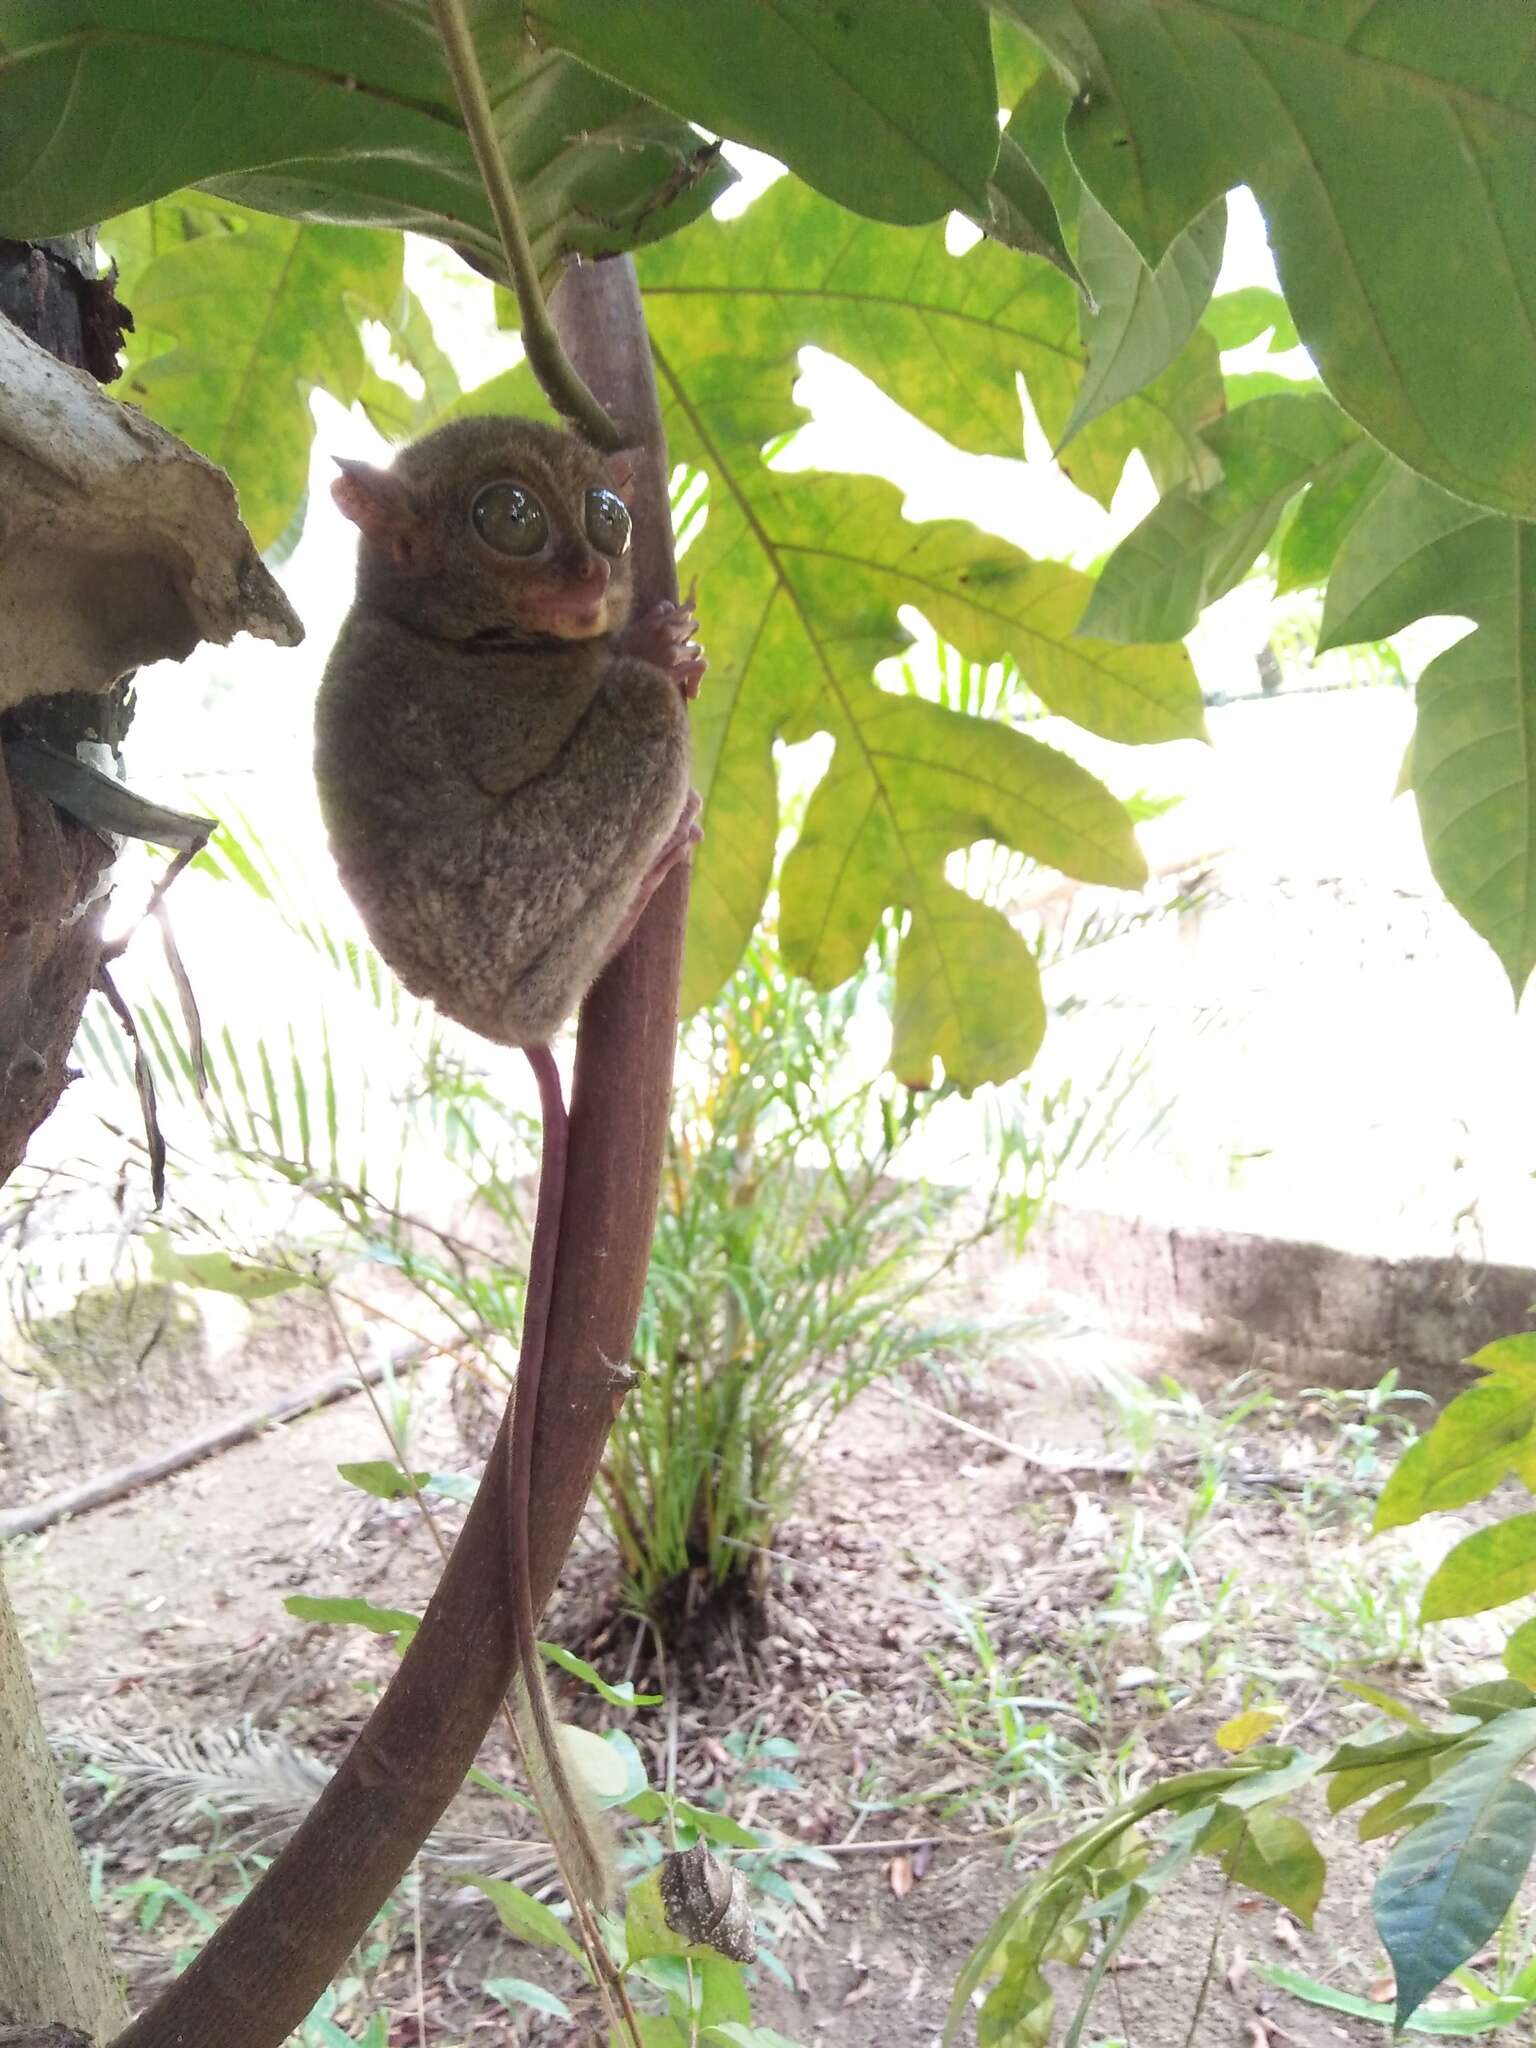 Image of Belitung Island tarsier